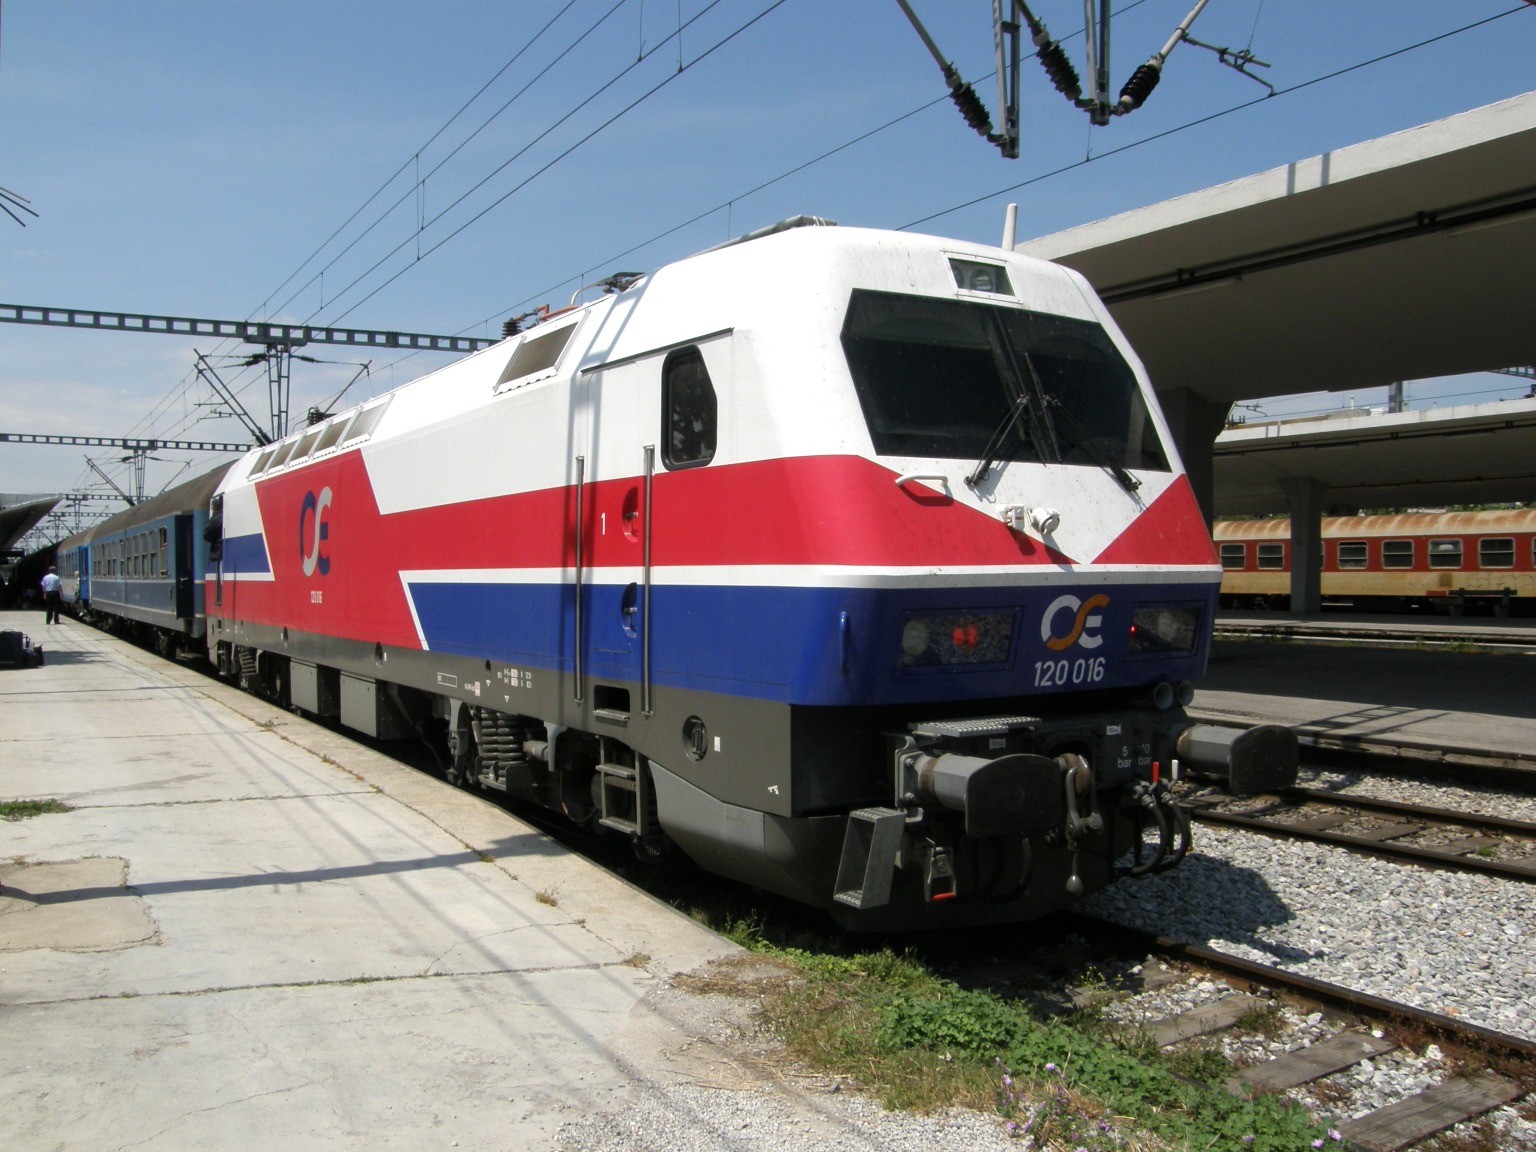 More information about "H παρακμή του σιδηροδρόμου στην Ελλάδα"